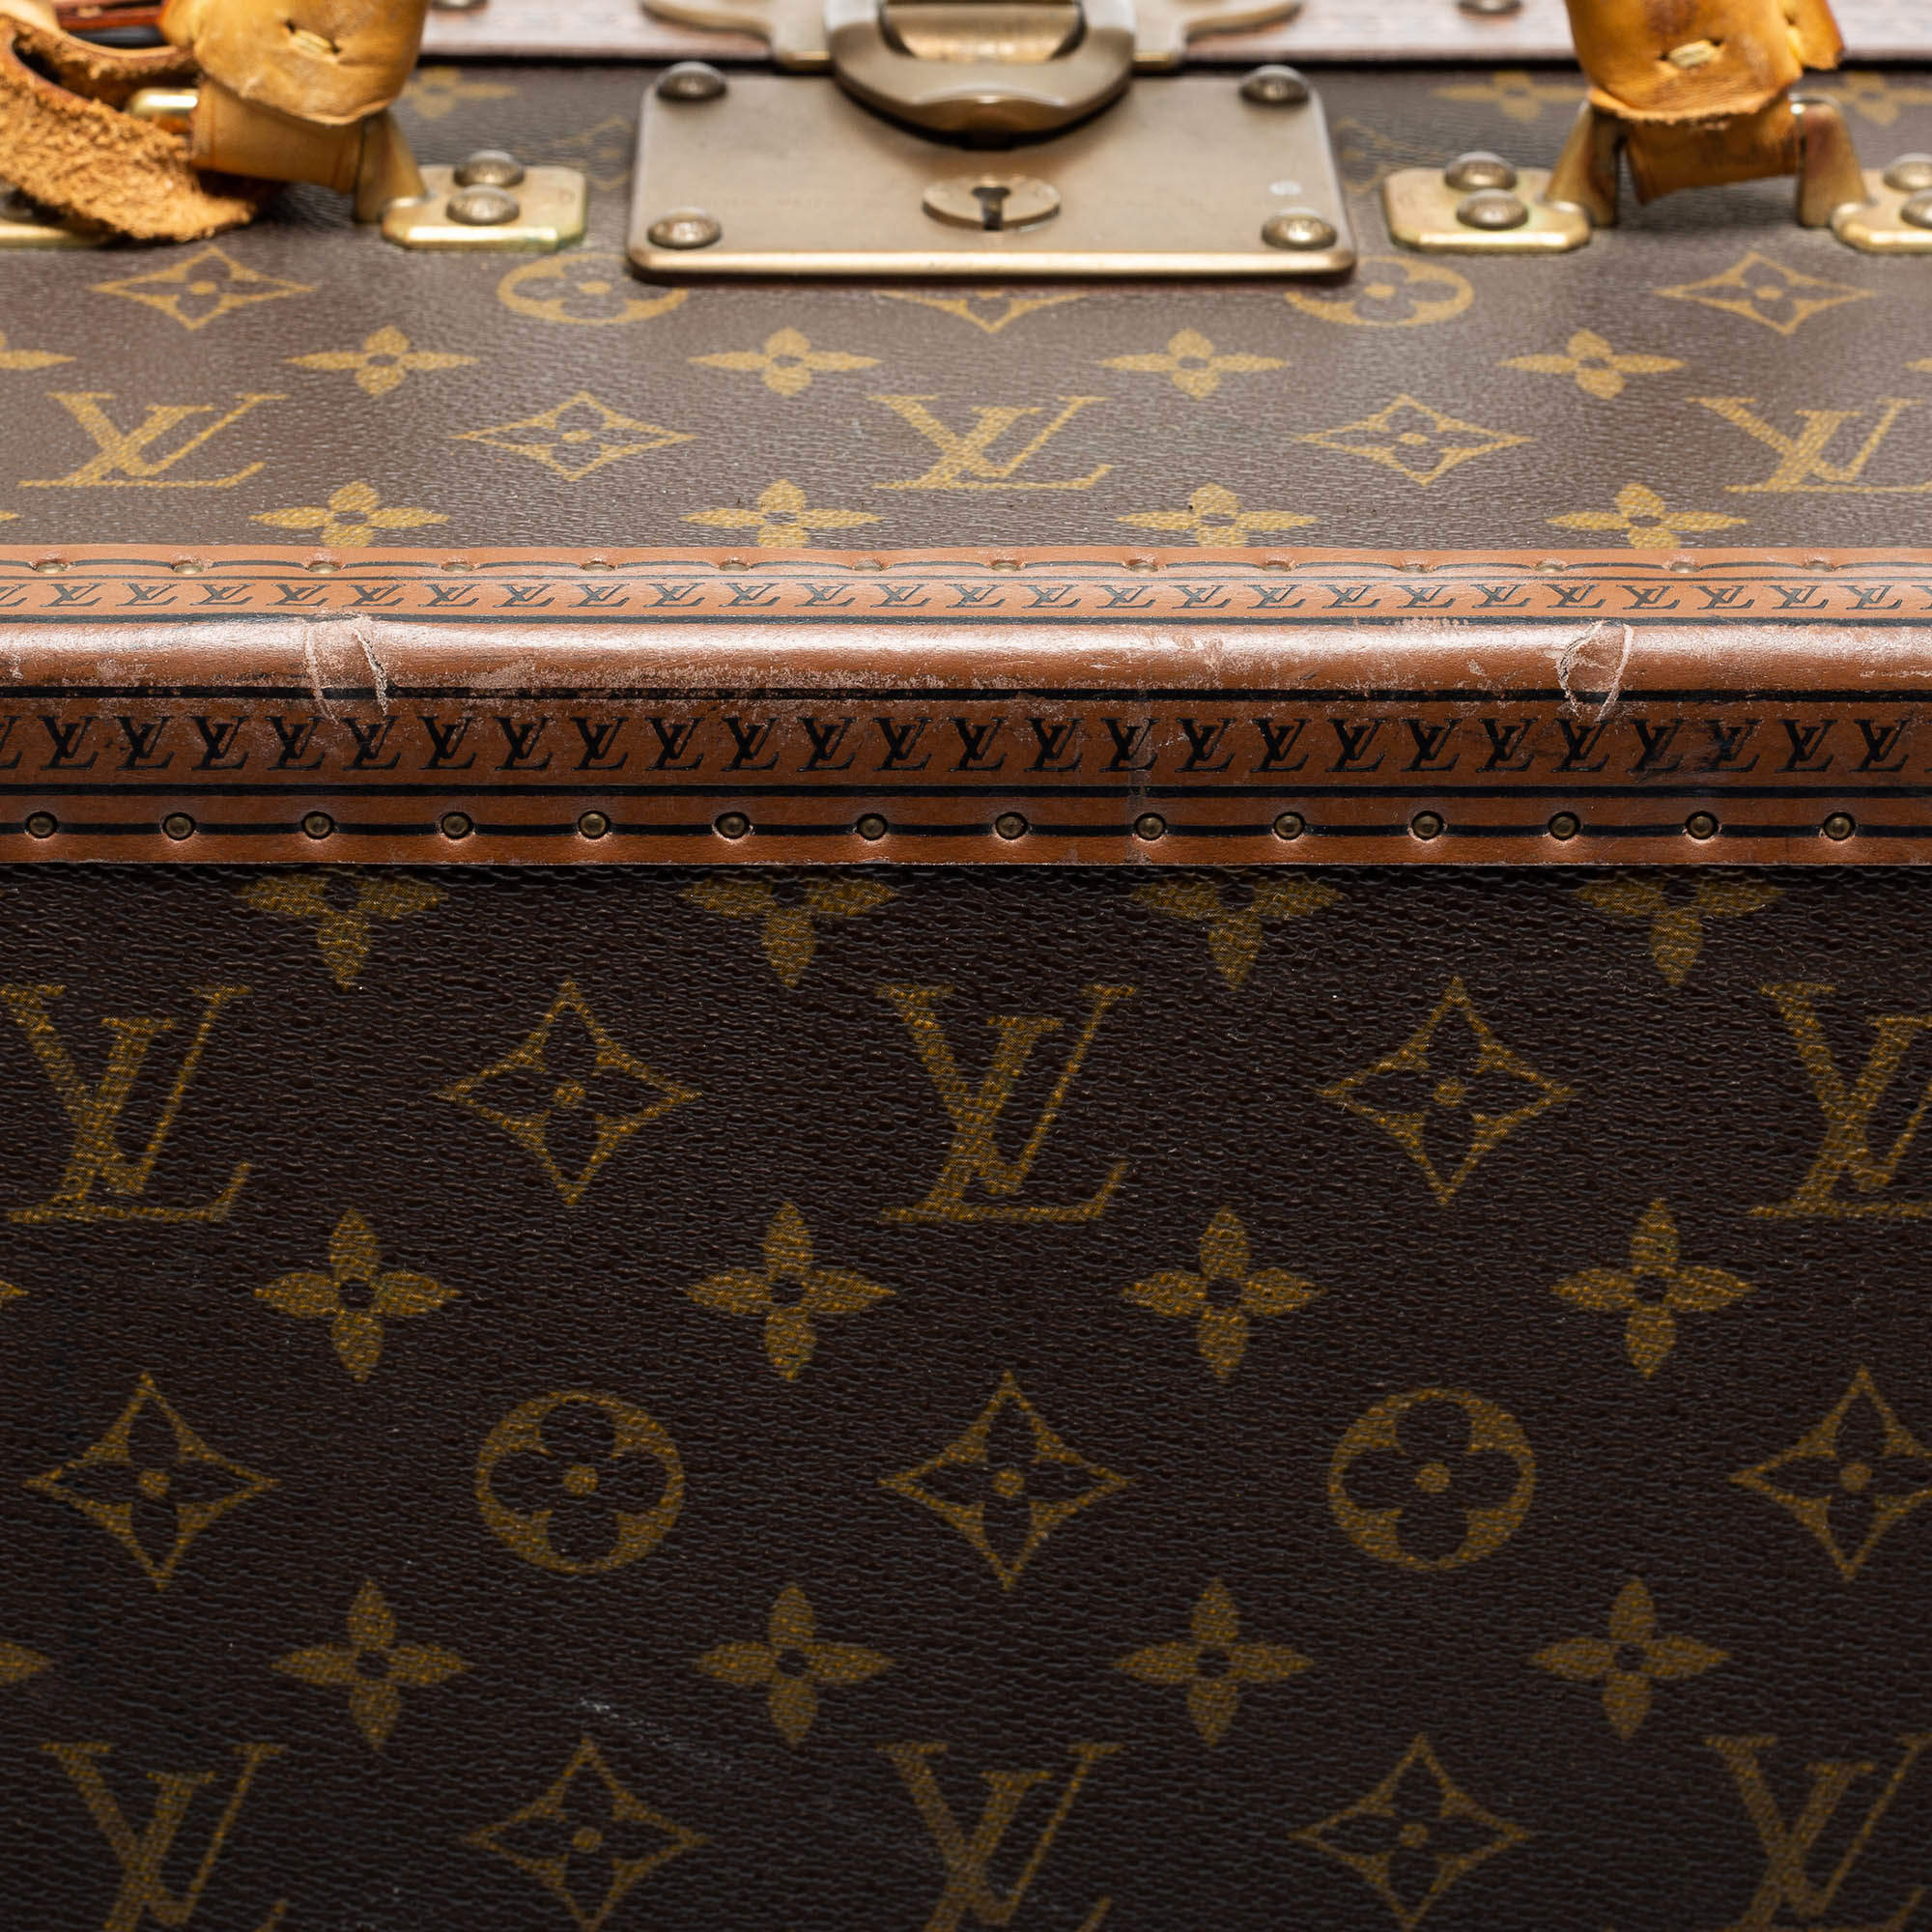 Authentic Louis Vuitton Alzer 75 Suitcase In Monogram Canvas